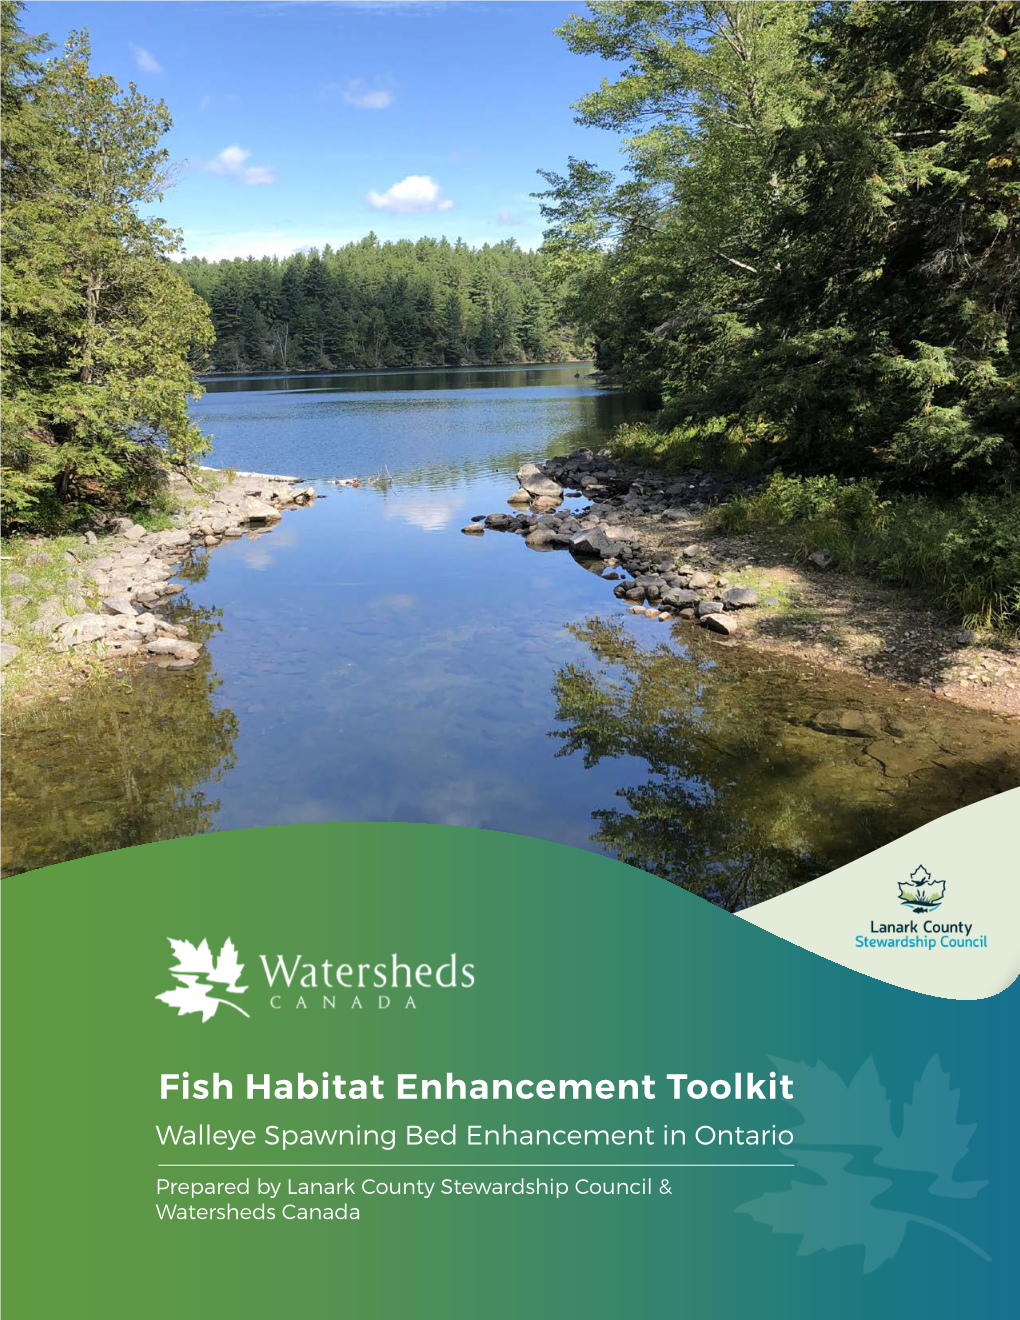 Fish Habitat Enhancement Toolkit Walleye Spawning Bed Enhancement in Ontario